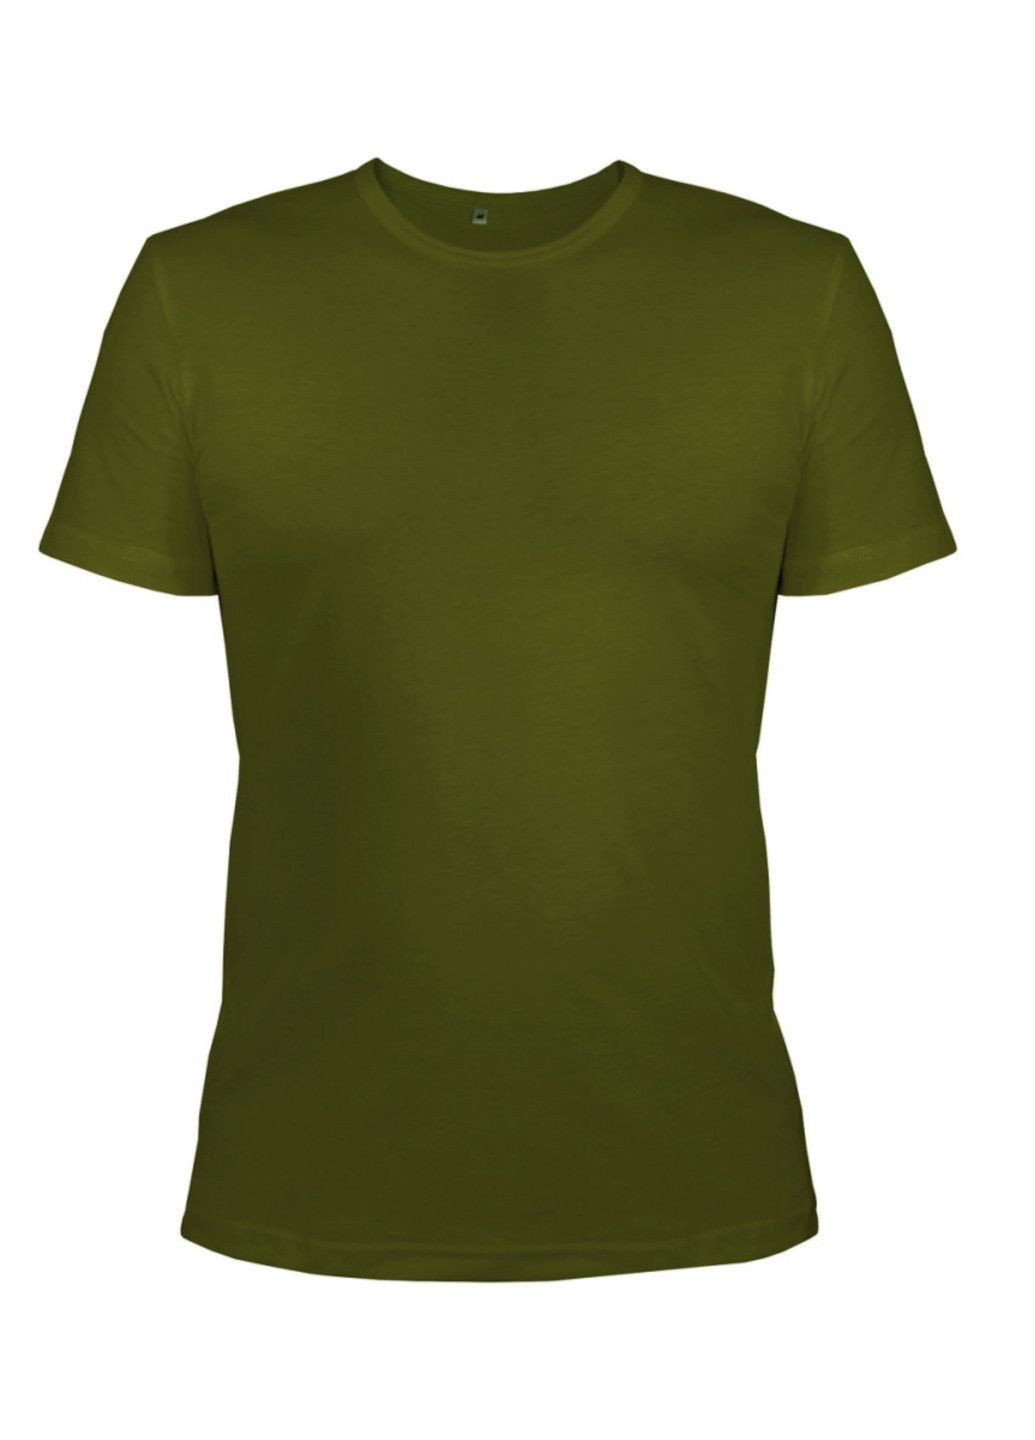 Хаки (оливковая) футболка мужская м.45 с коротким рукавом Ярослав